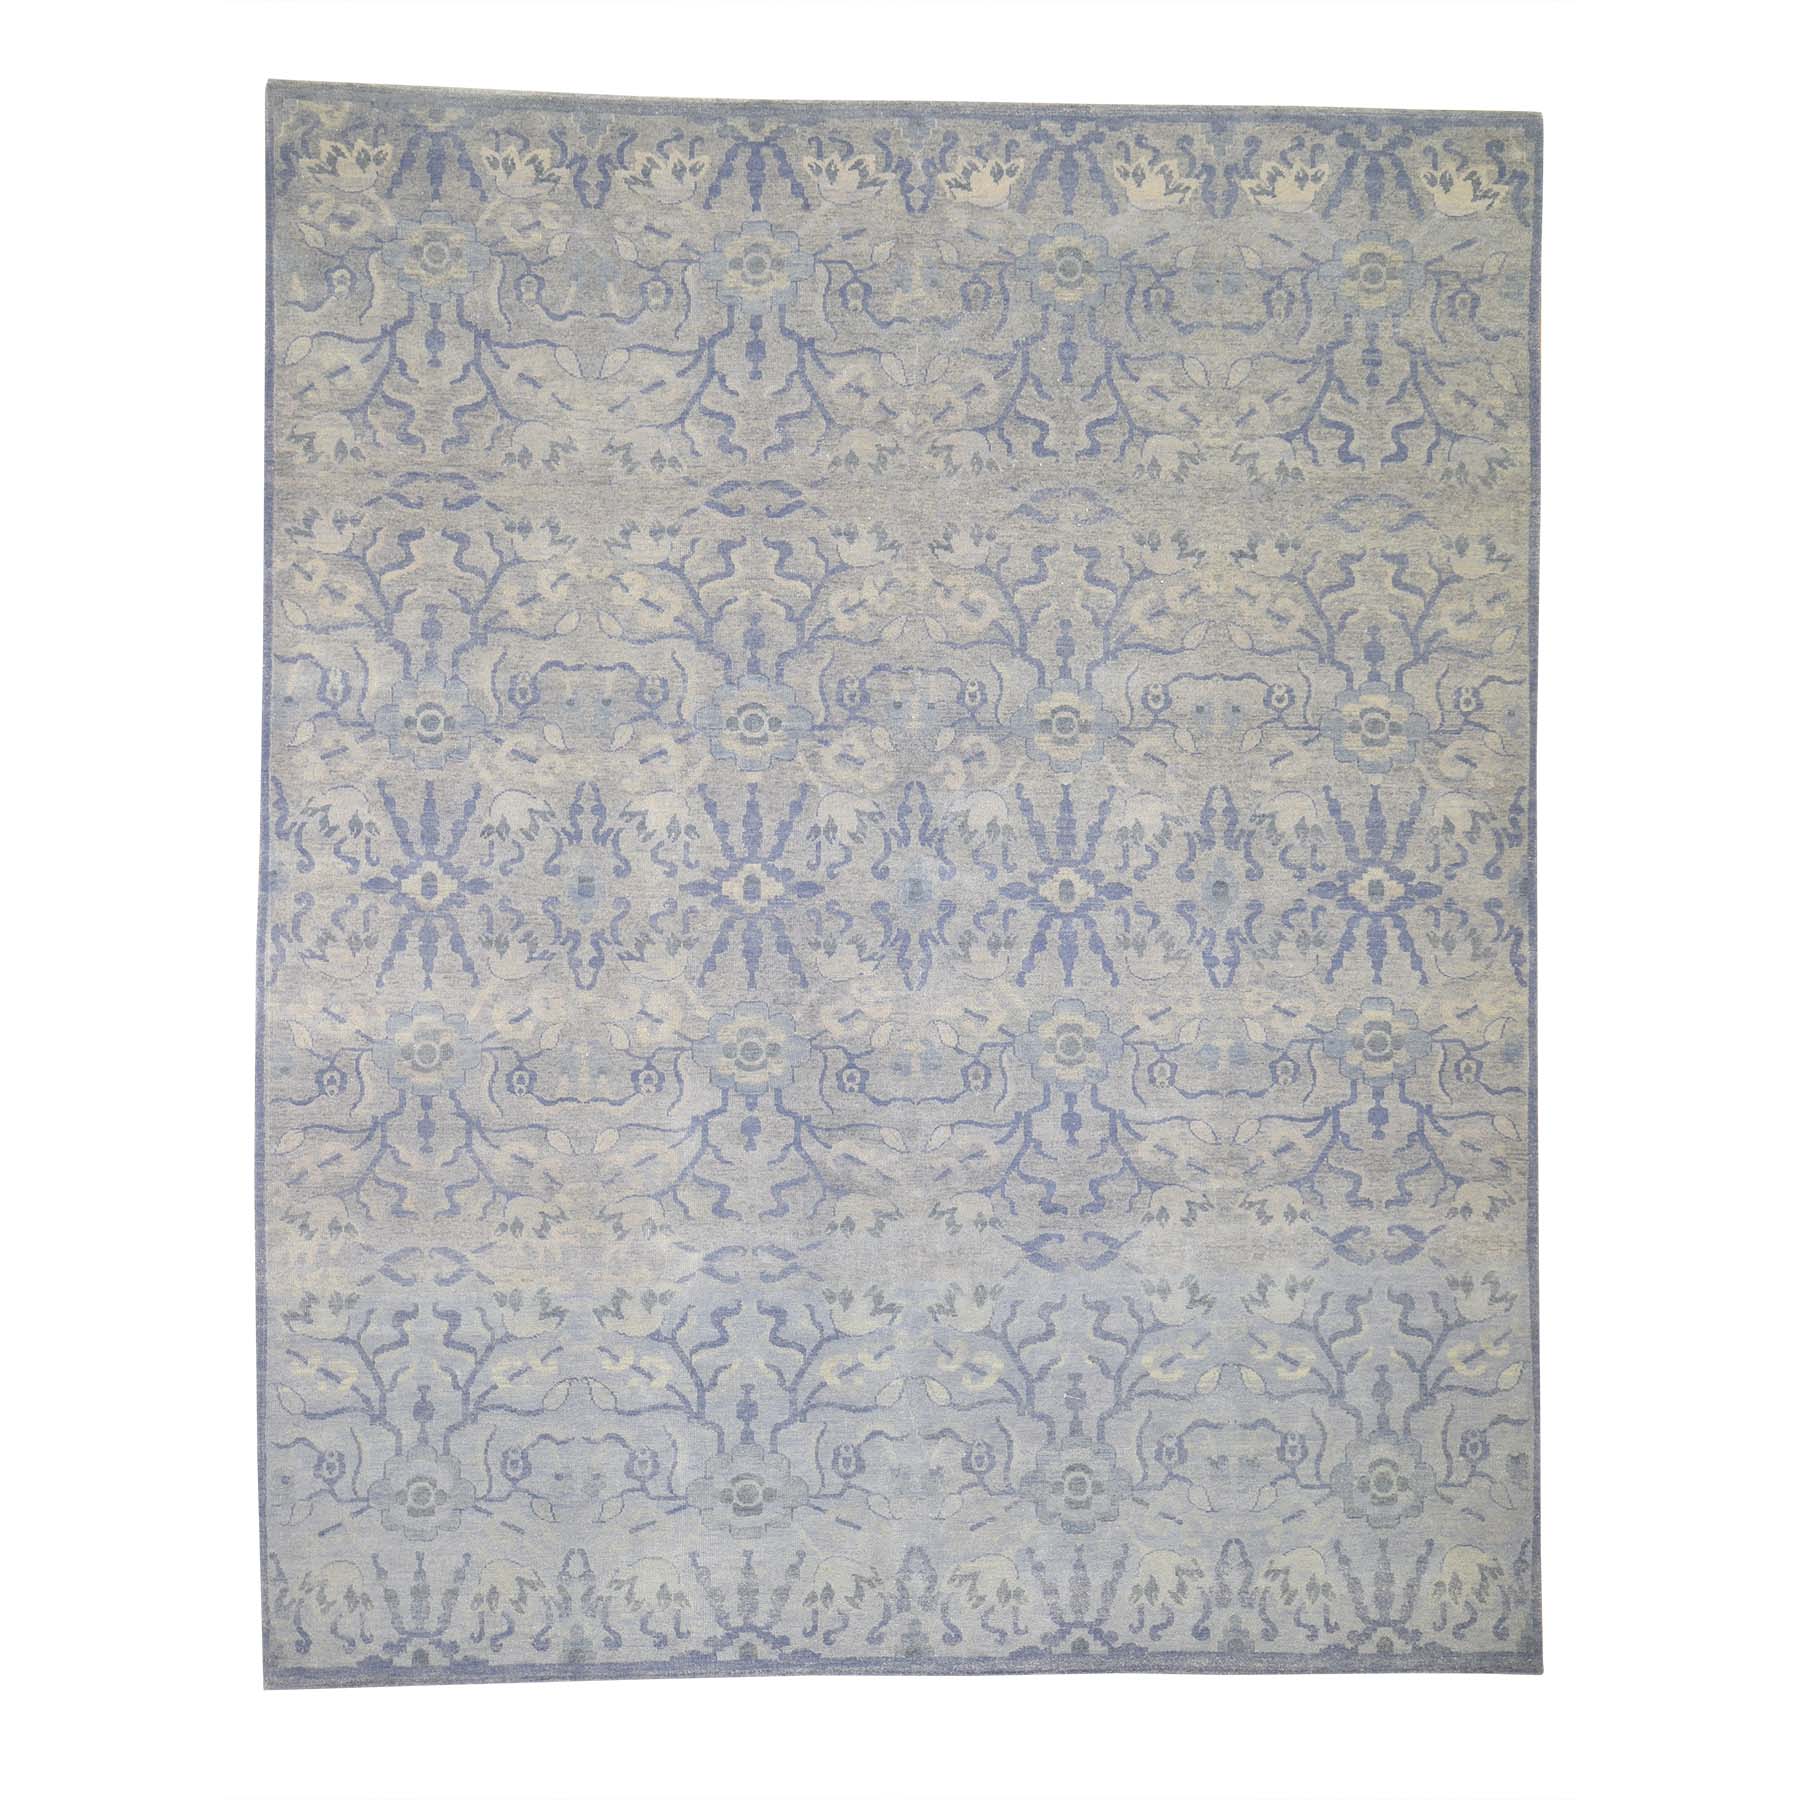 8'x9'10" Modern Light Blue Tone on Tone Pure Wool Hand Woven Oriental Rug 